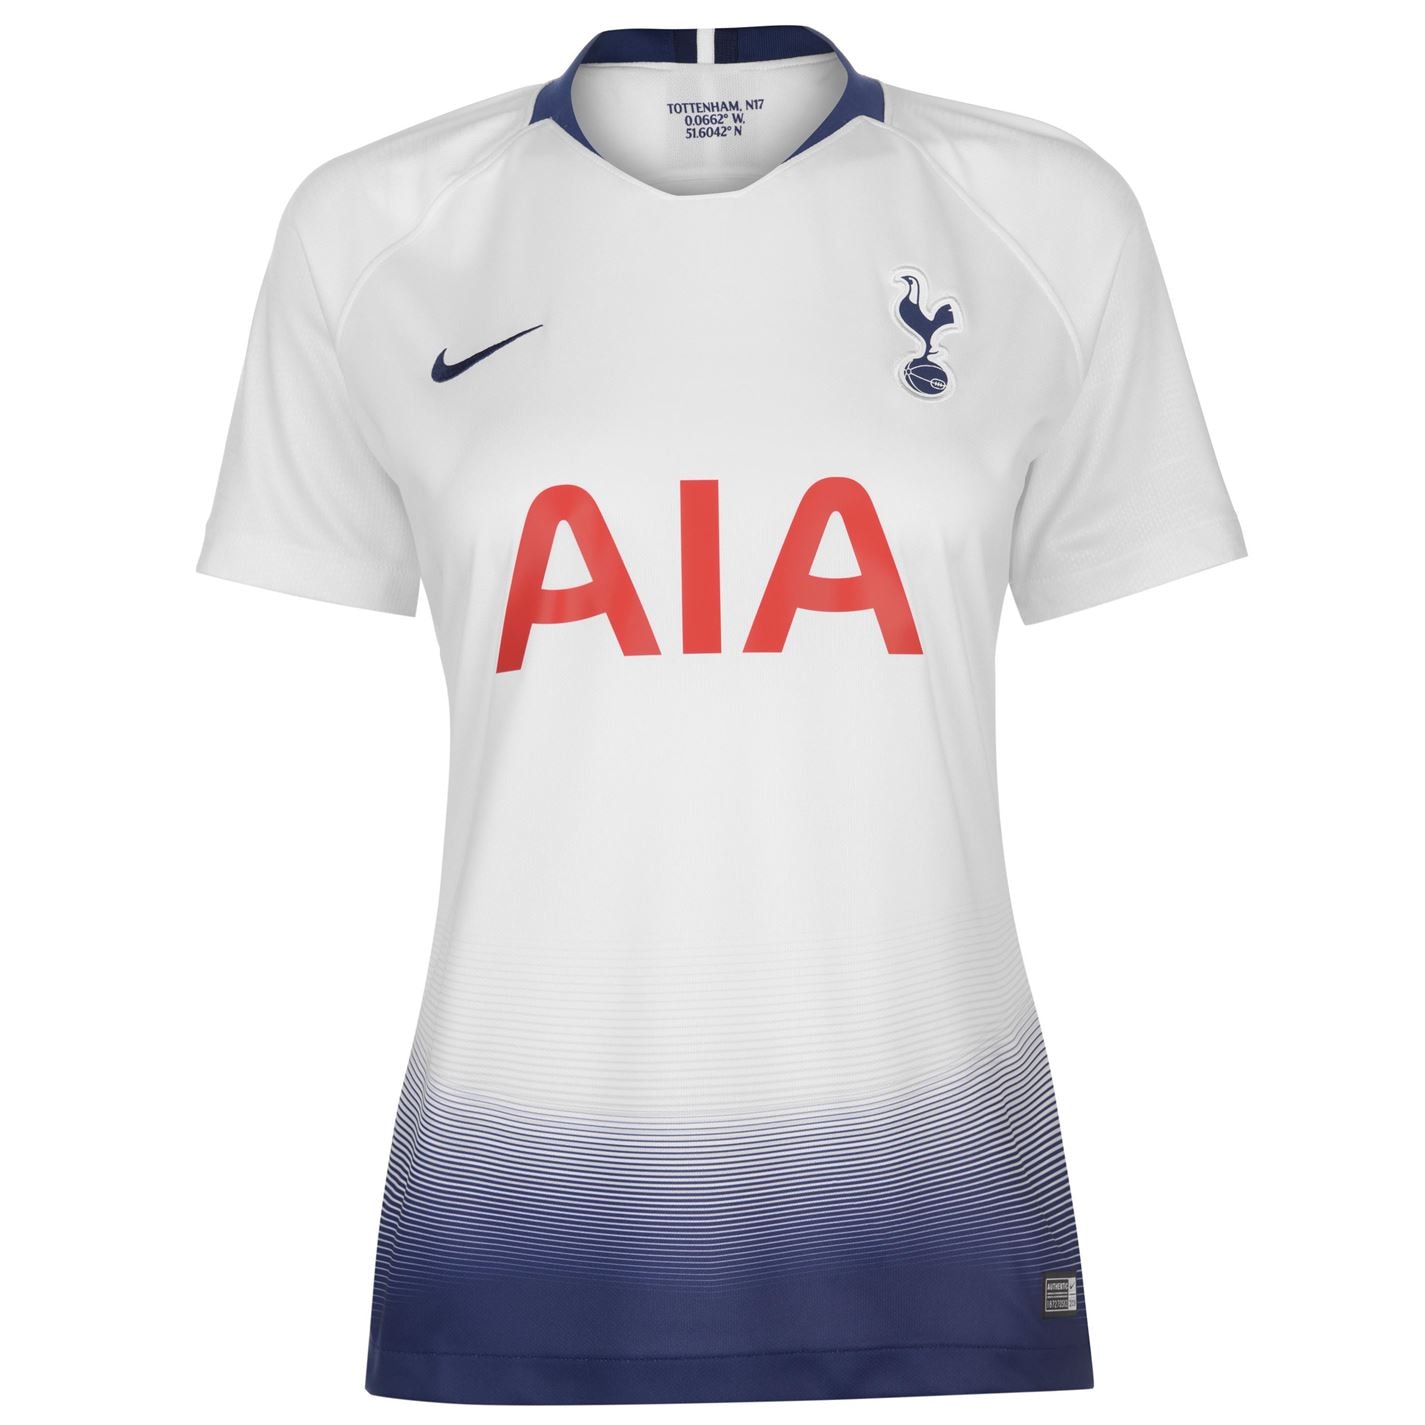 Tricou Acasa Nike Tottenham Hotspur 2018 2019 pentru Femei